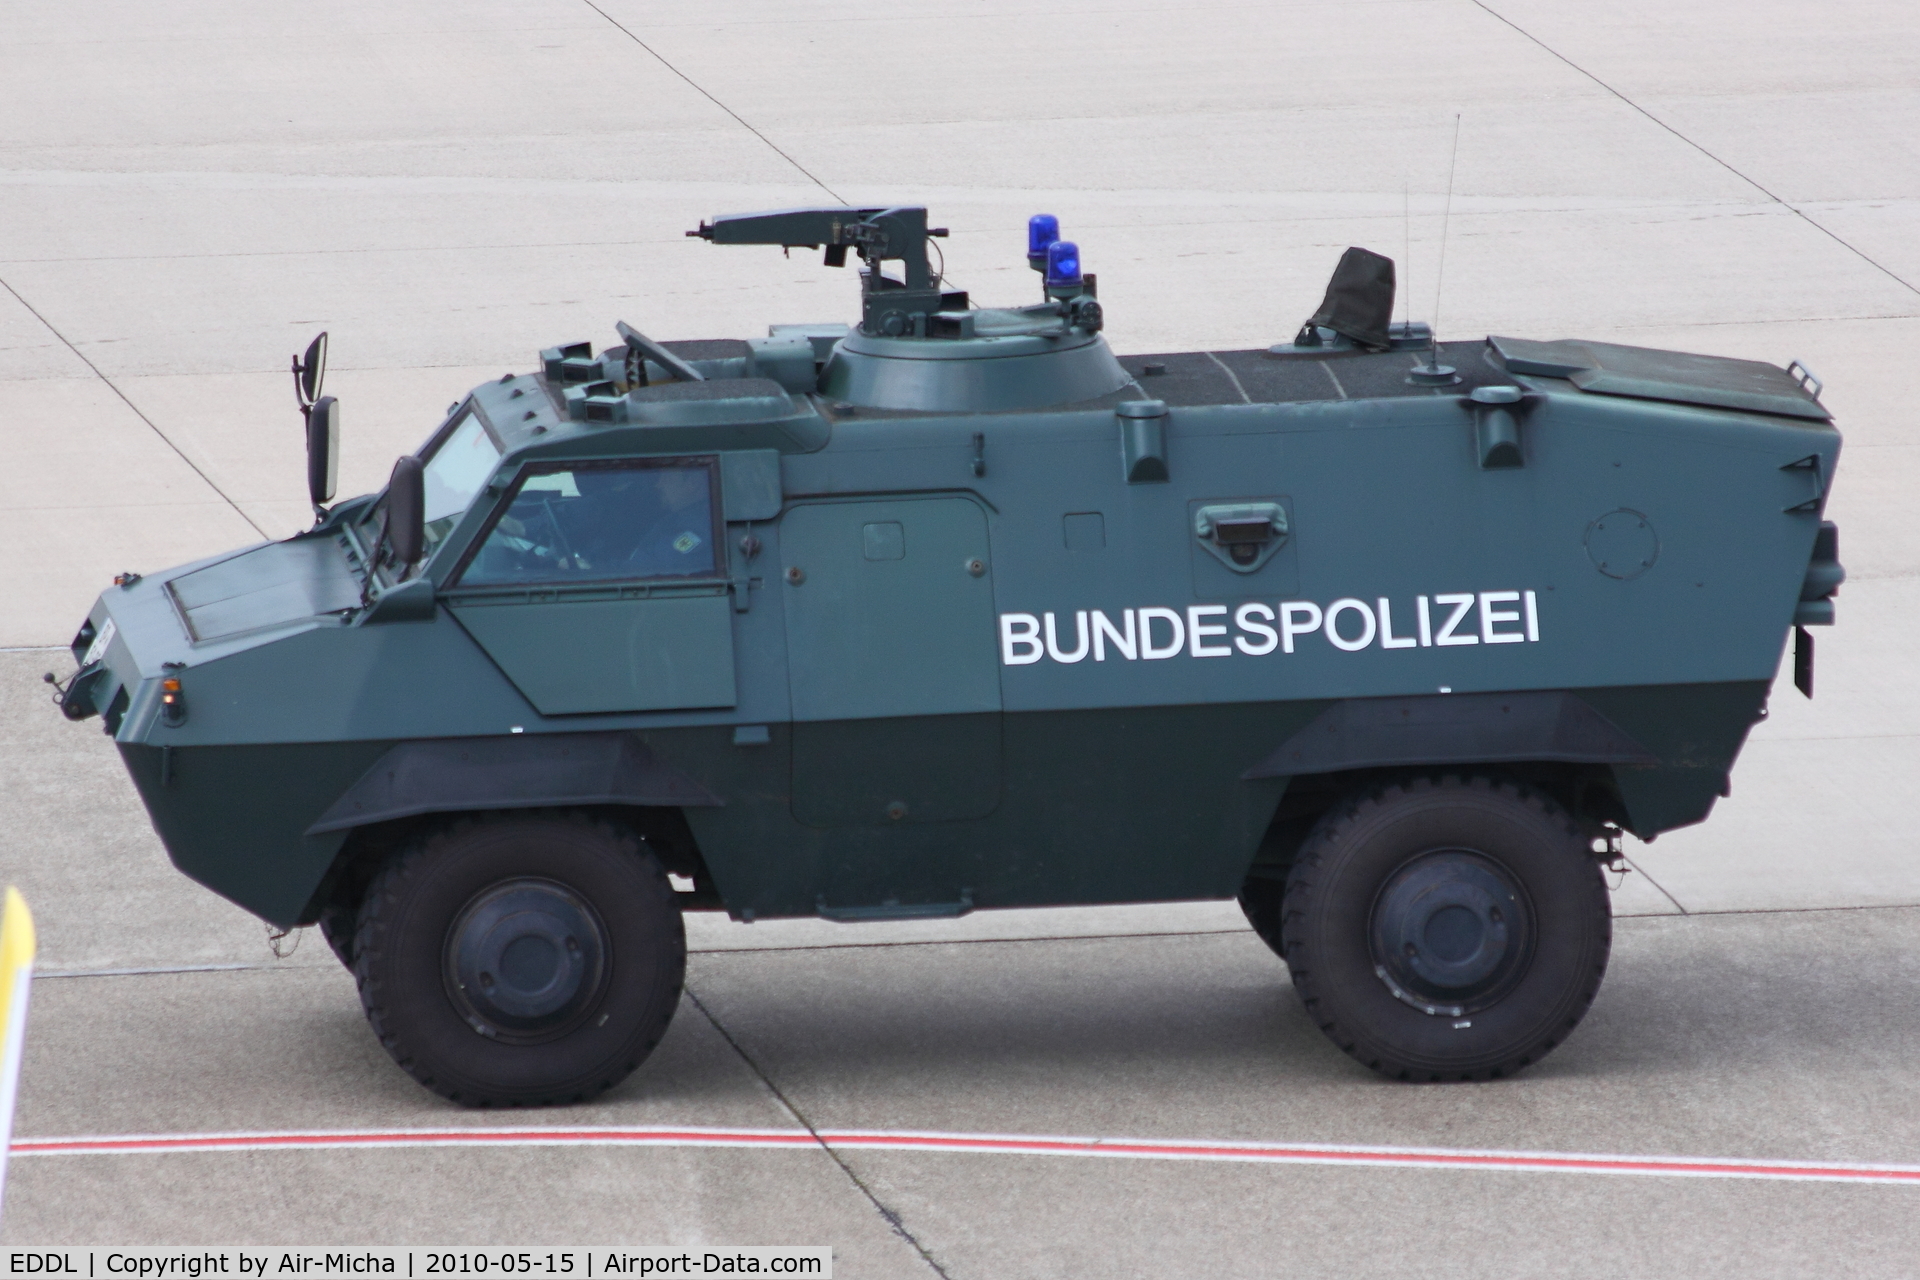 Düsseldorf International Airport, Düsseldorf Germany (EDDL) - Police Armored Car